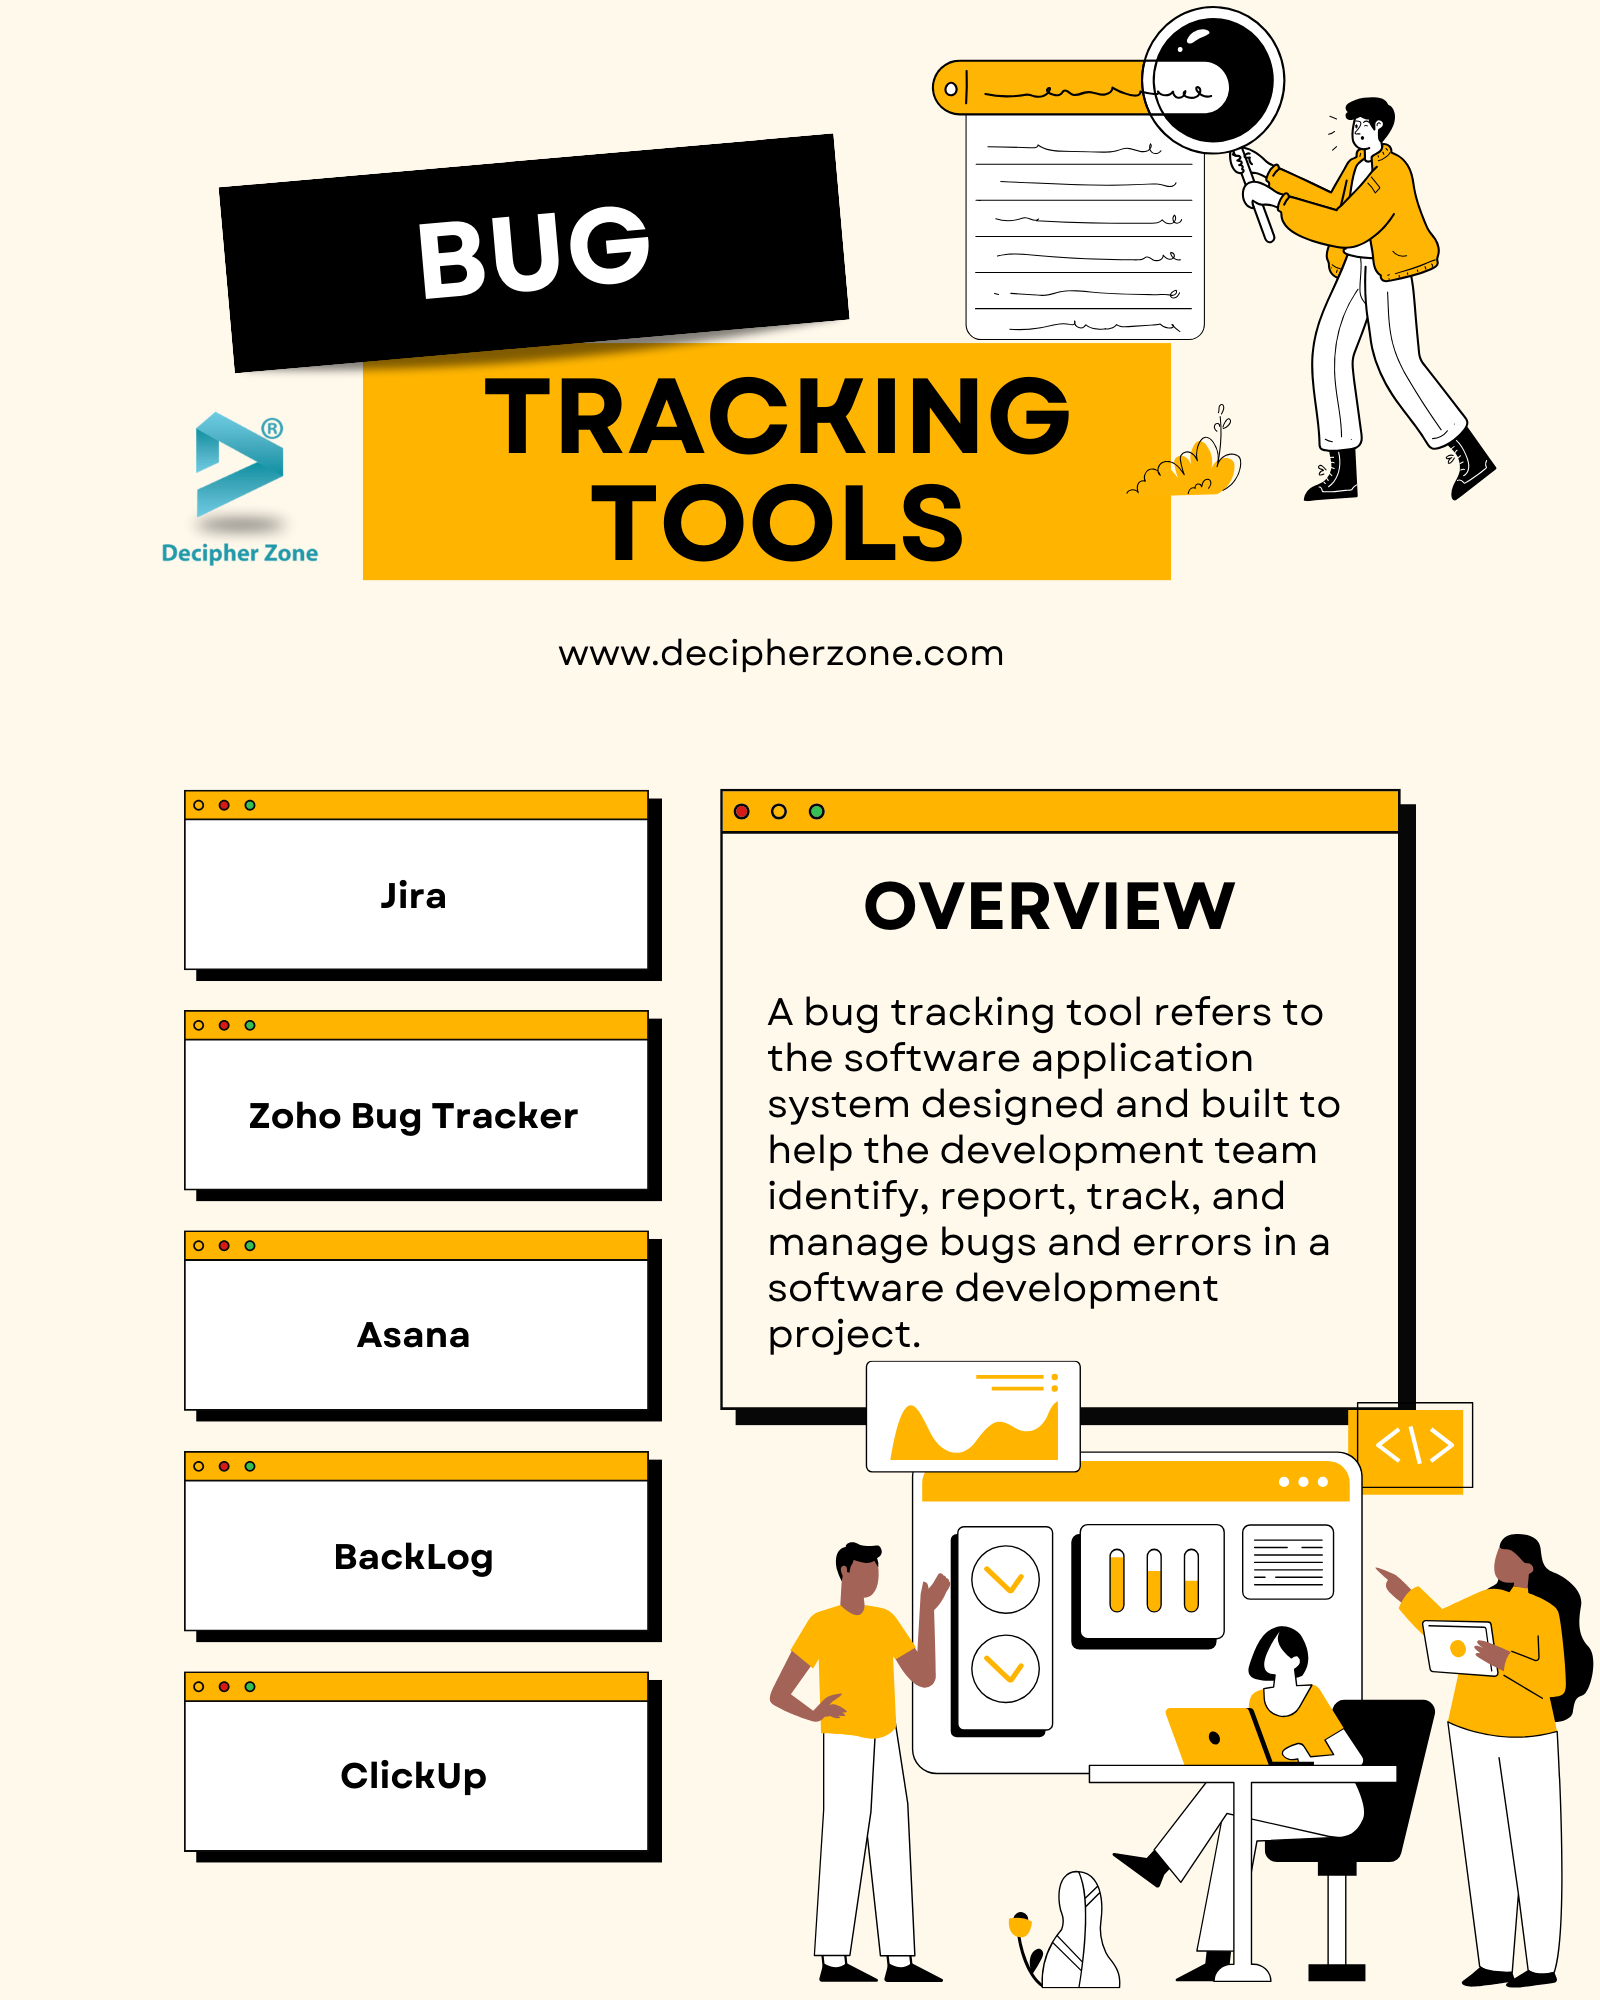 Top 5 Bug Tracking Tools